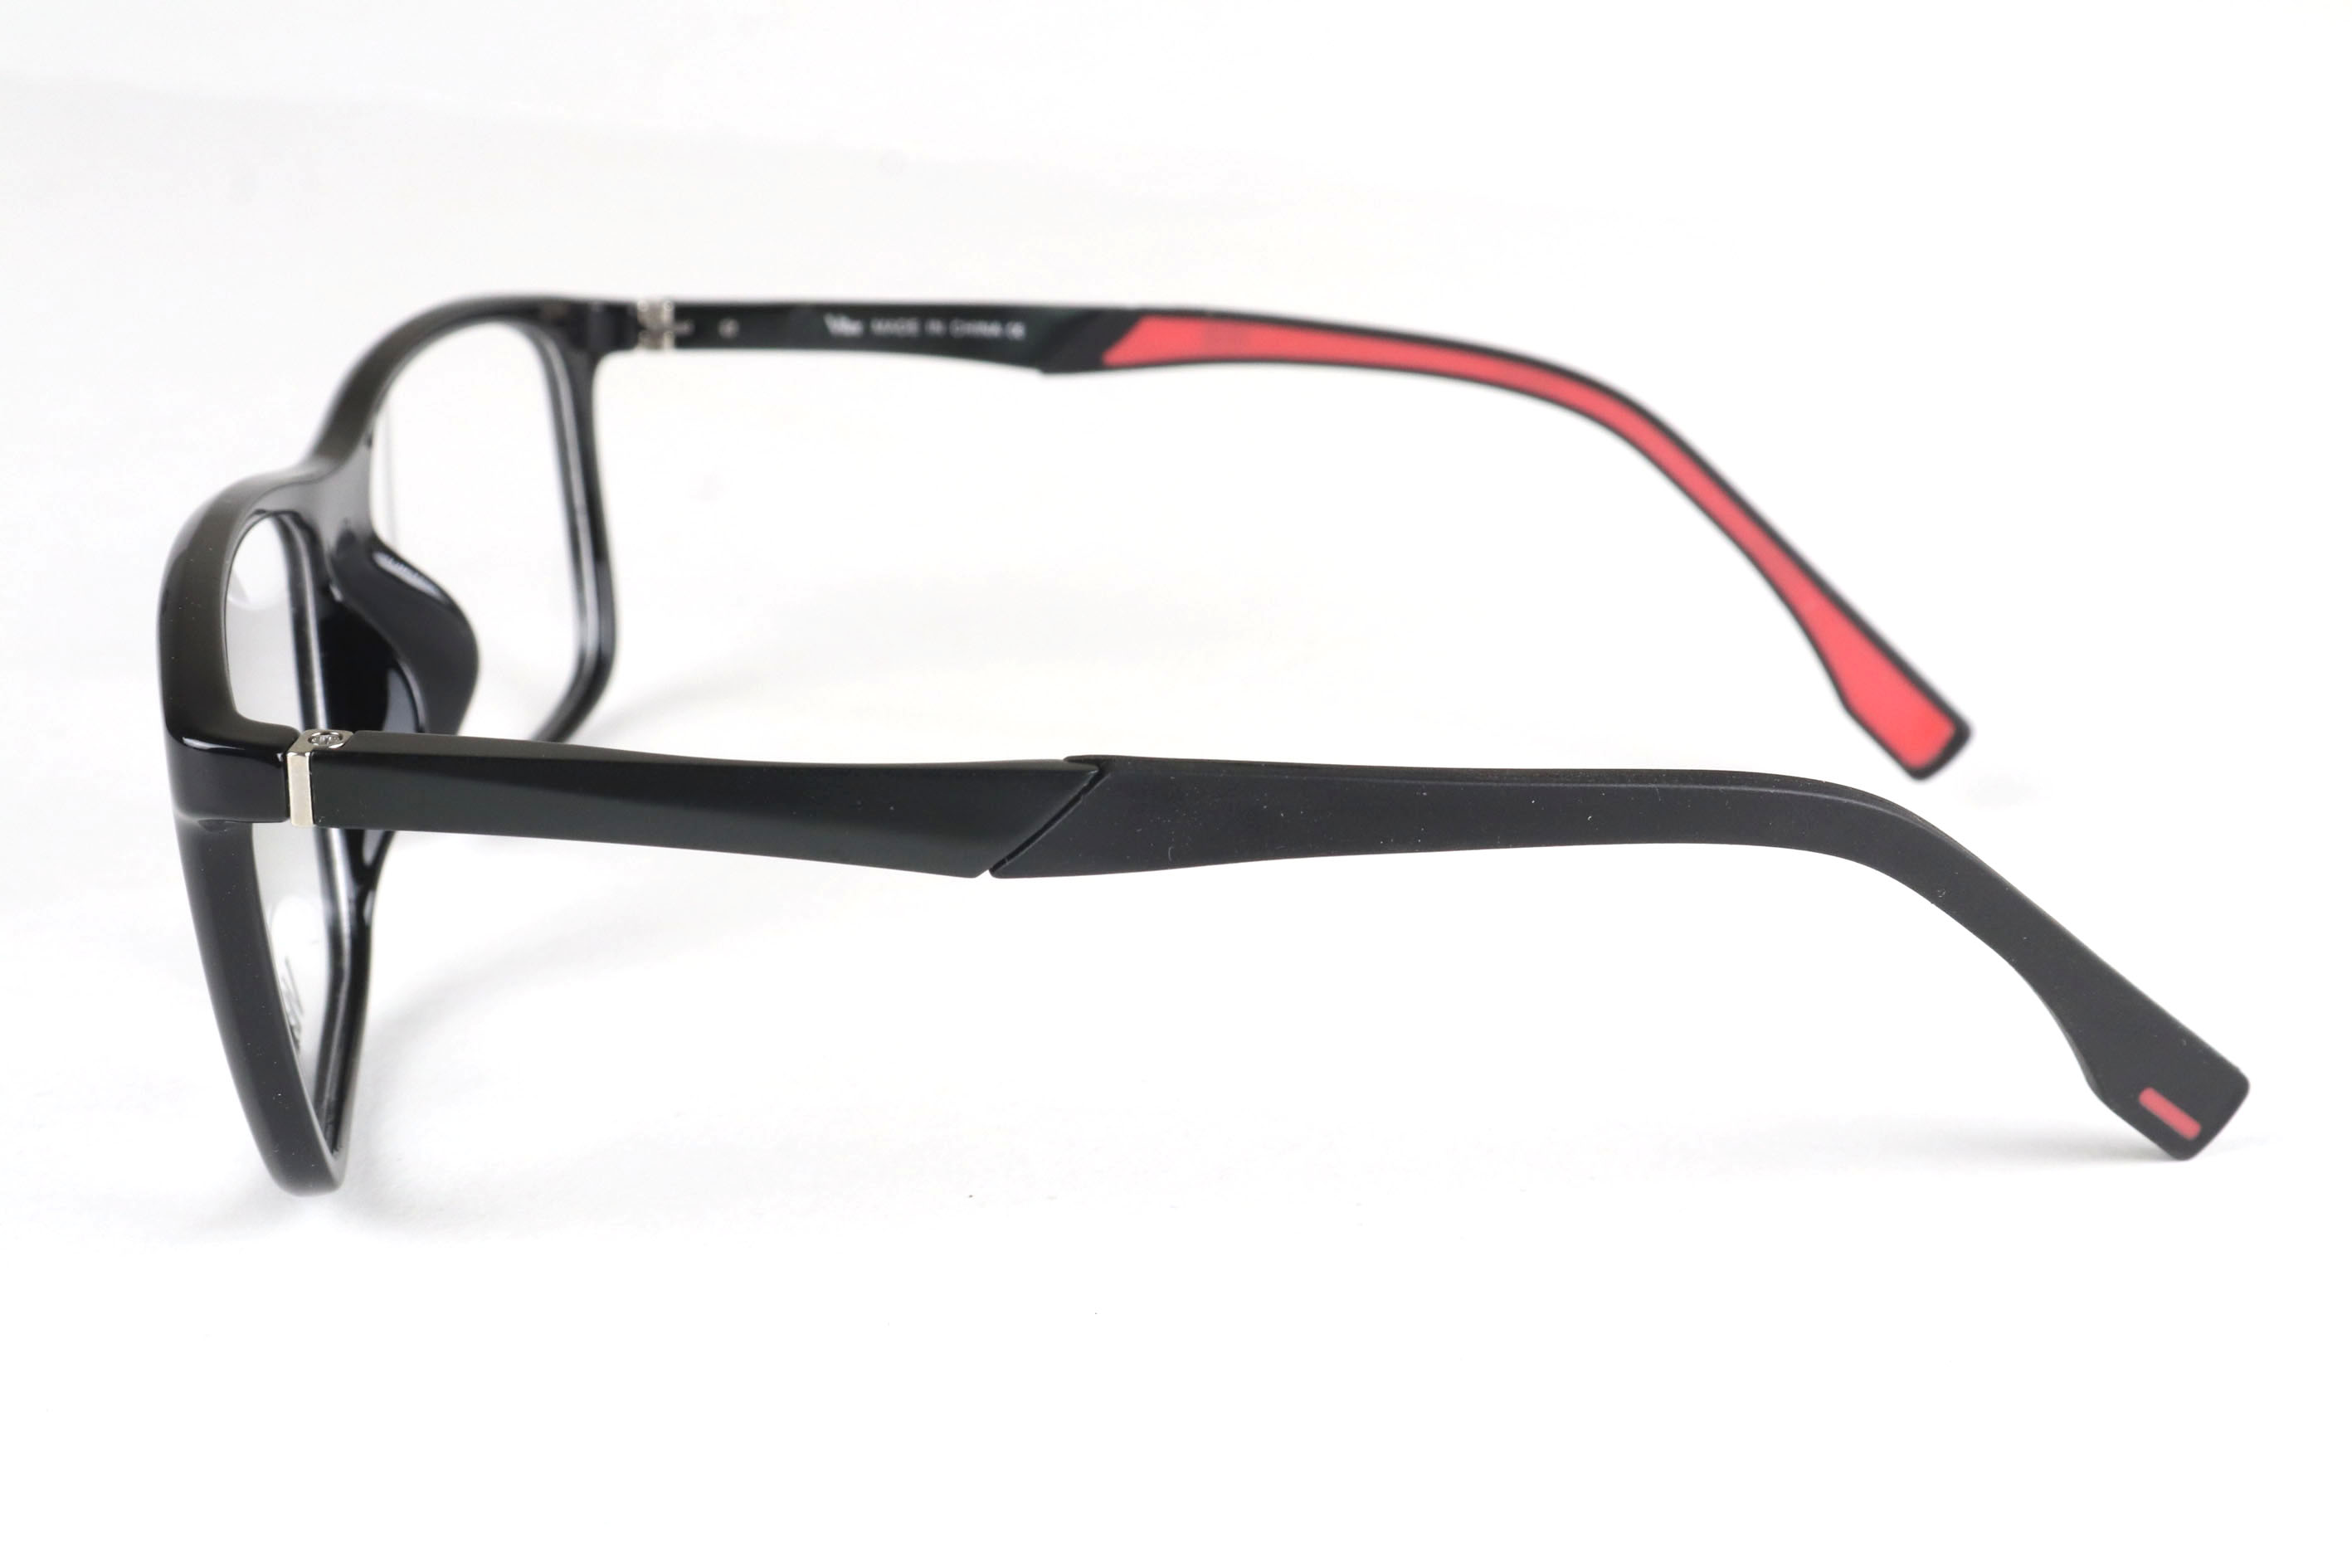 Vilar- Eyeglasses -5253-c4-54-21-140 